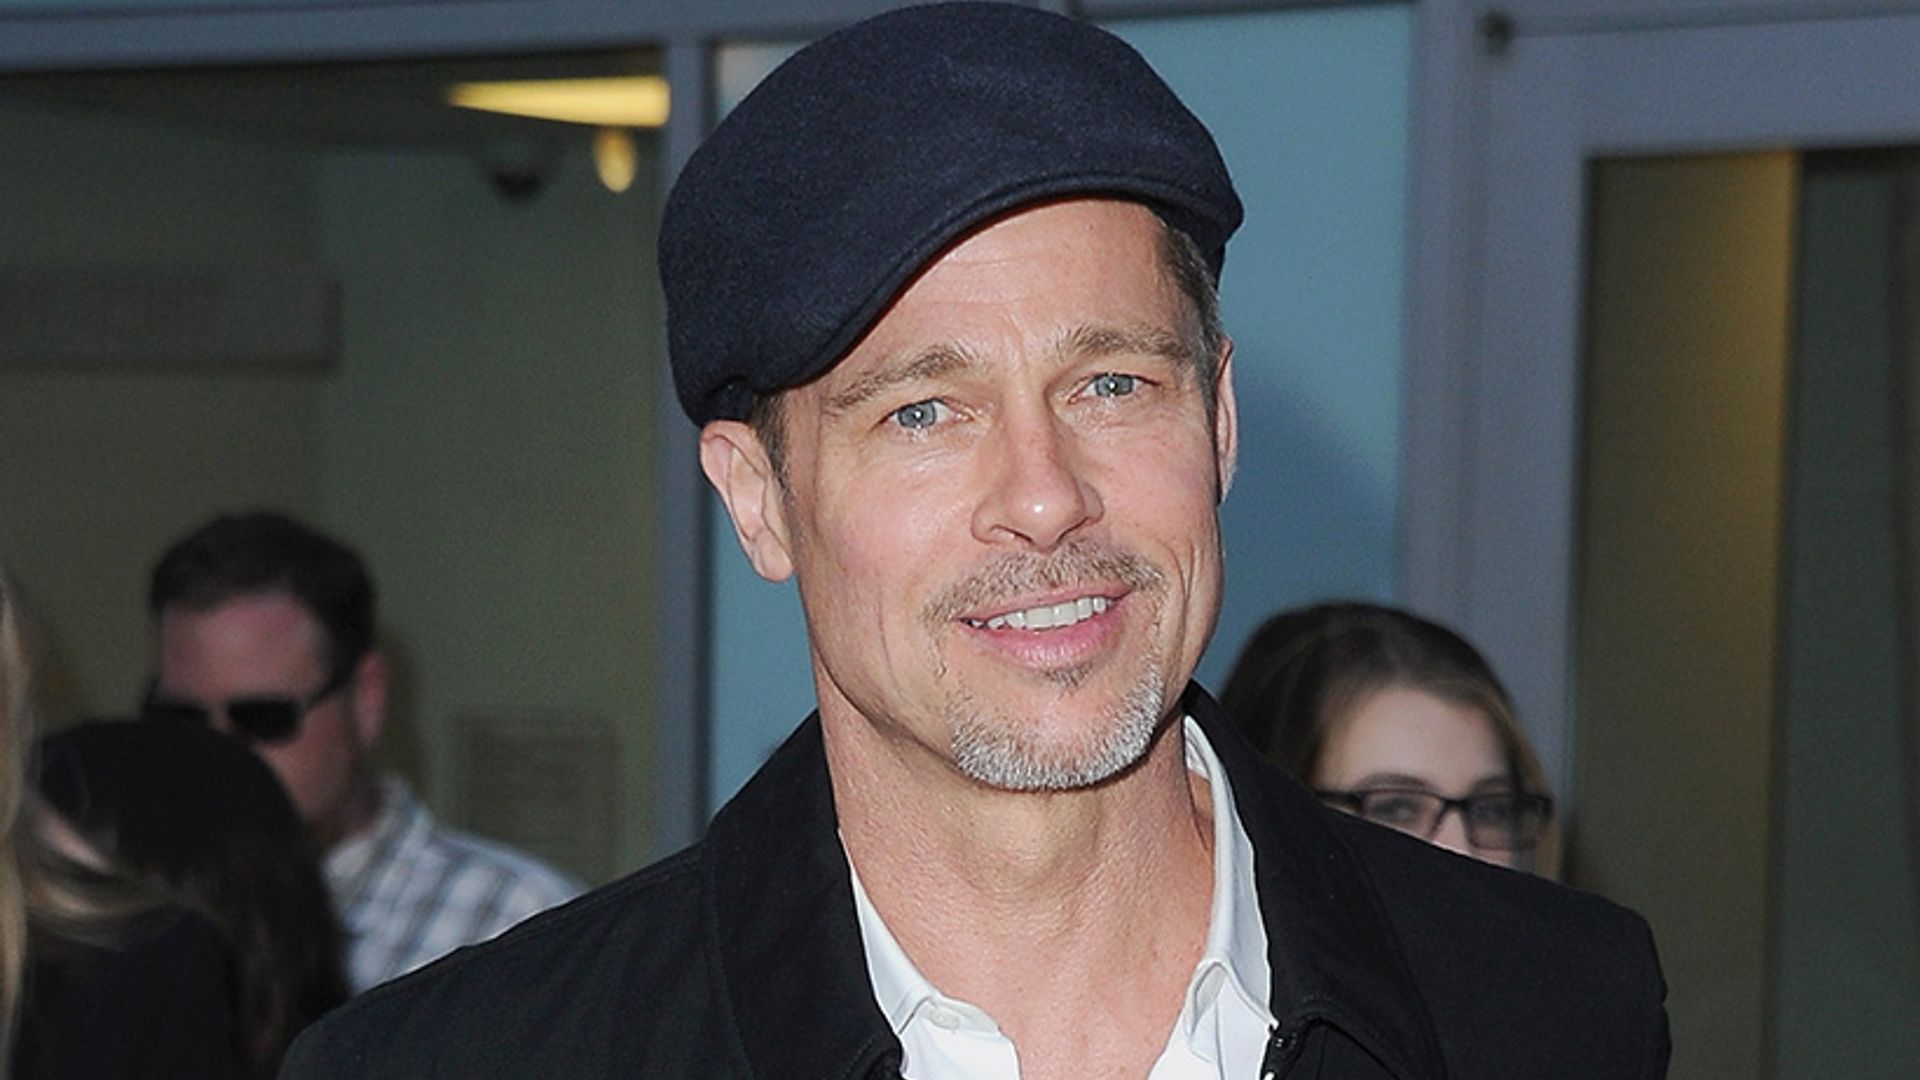 Brad Pitt returns to red carpet after four-month break